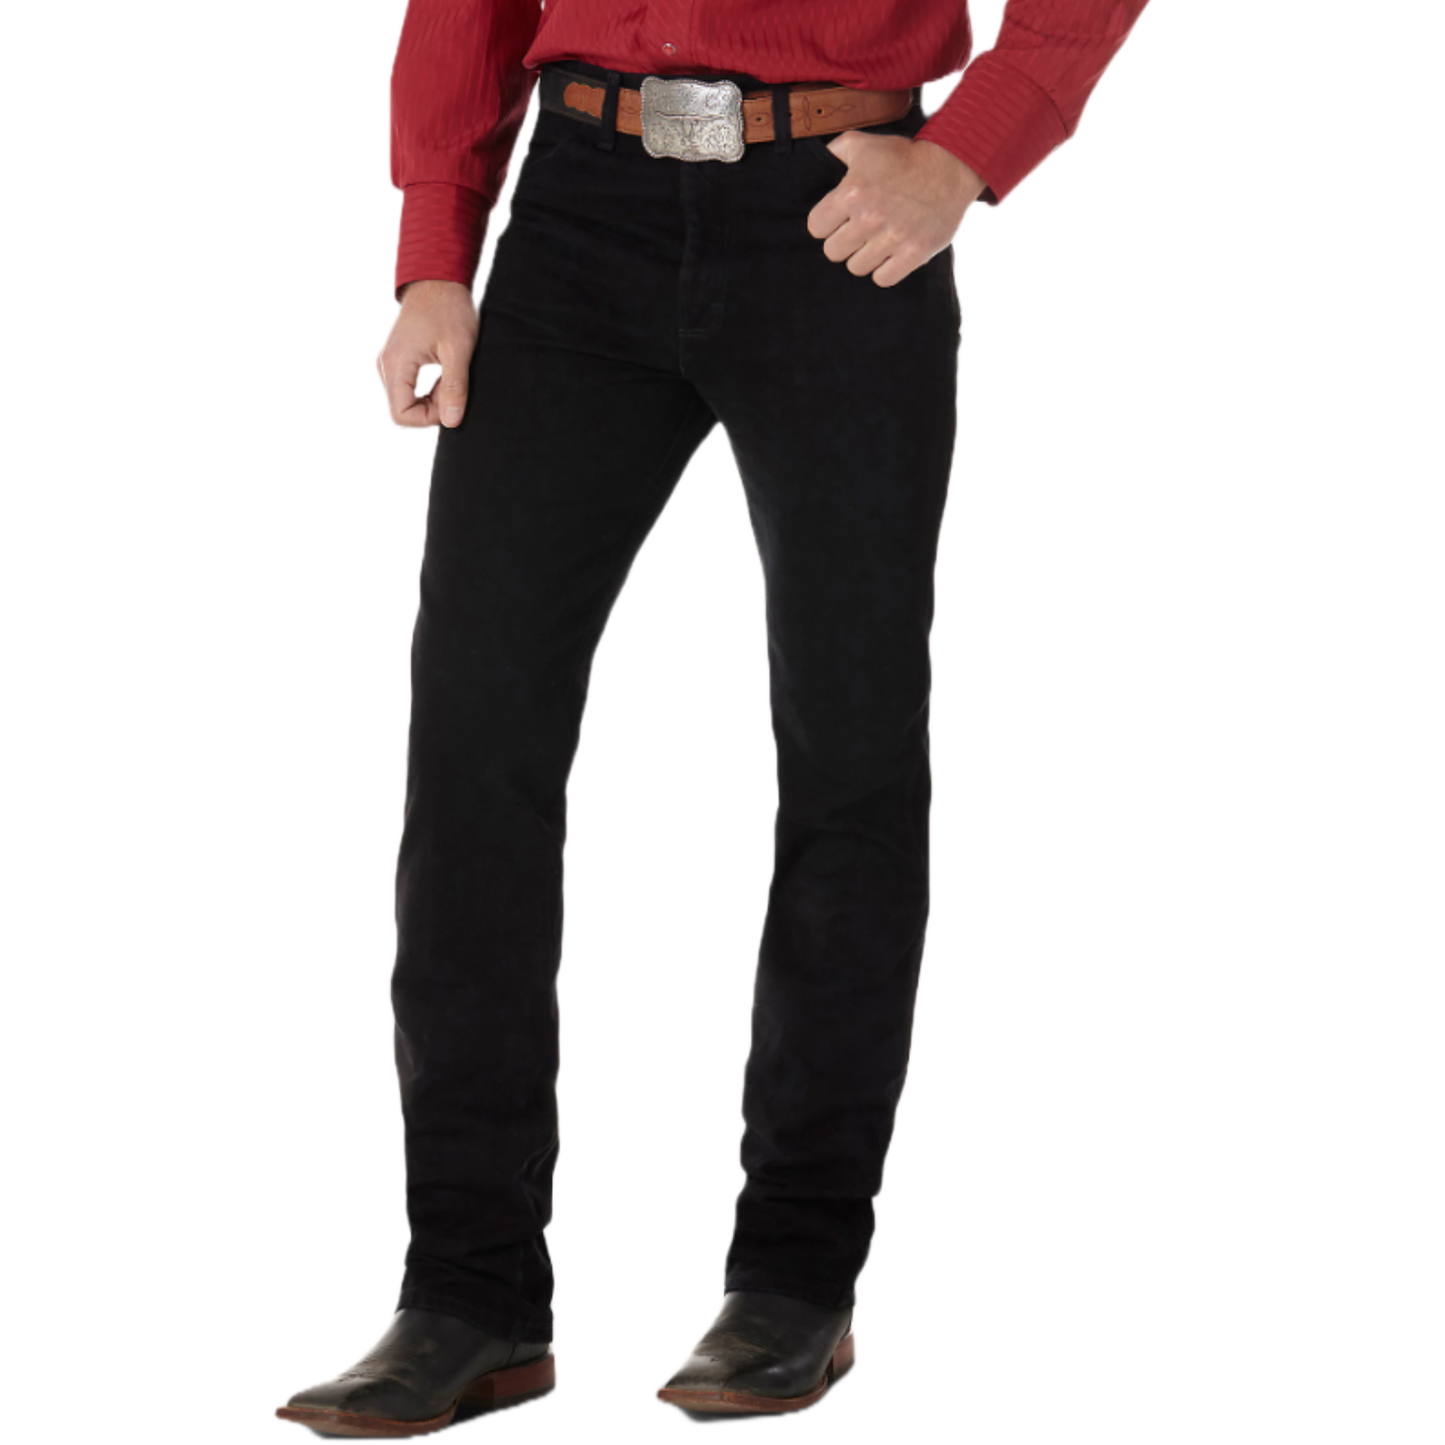 Wrangler Men's Cowboy Cut® Silver Edition Slim Fit Denim Black Jeans 933SEWK